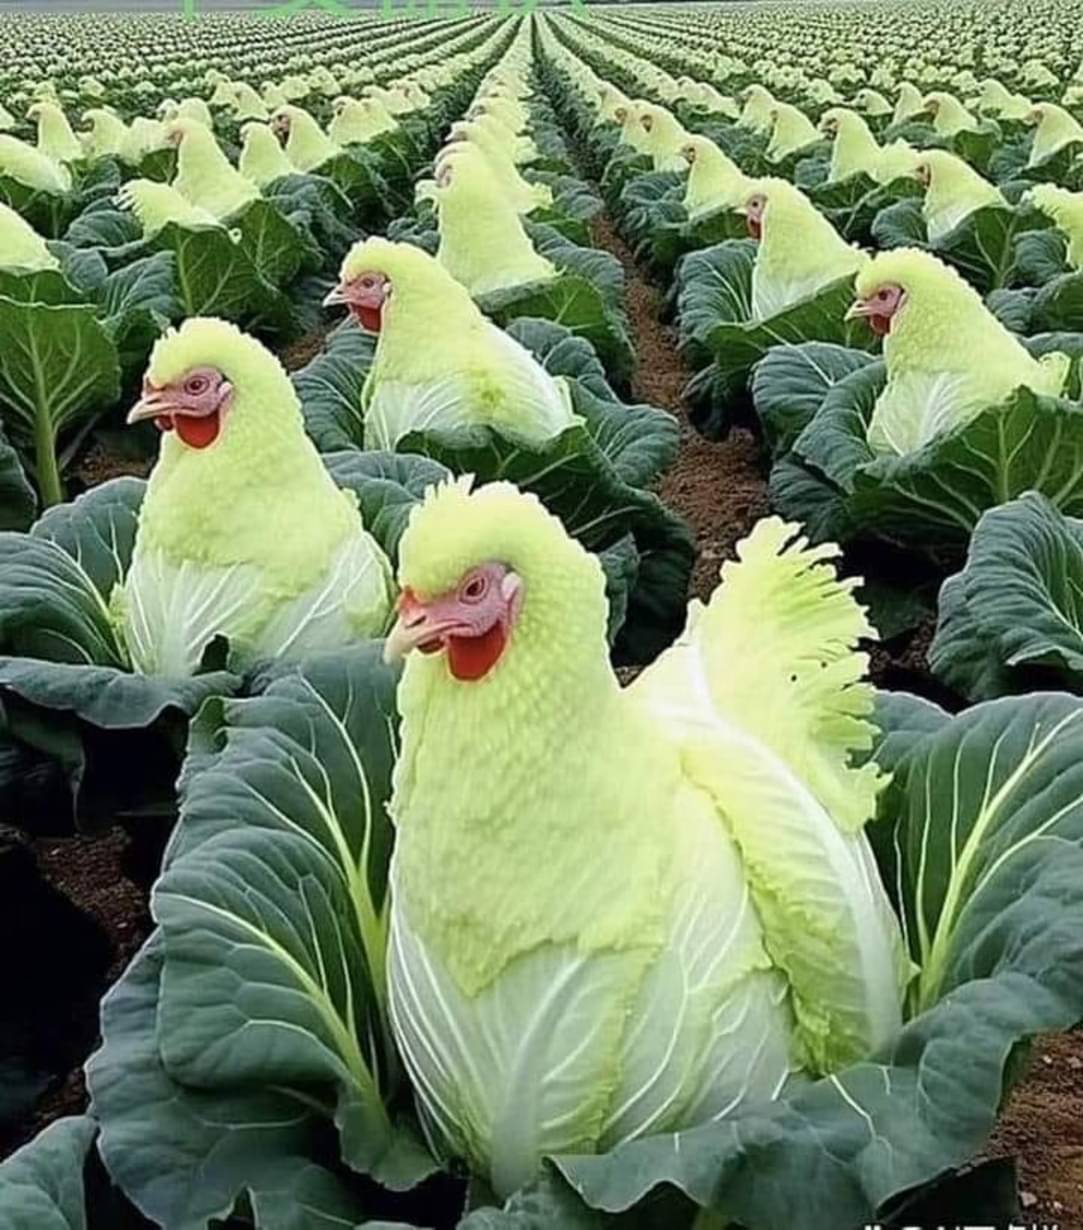 vegan_chicken.jpg